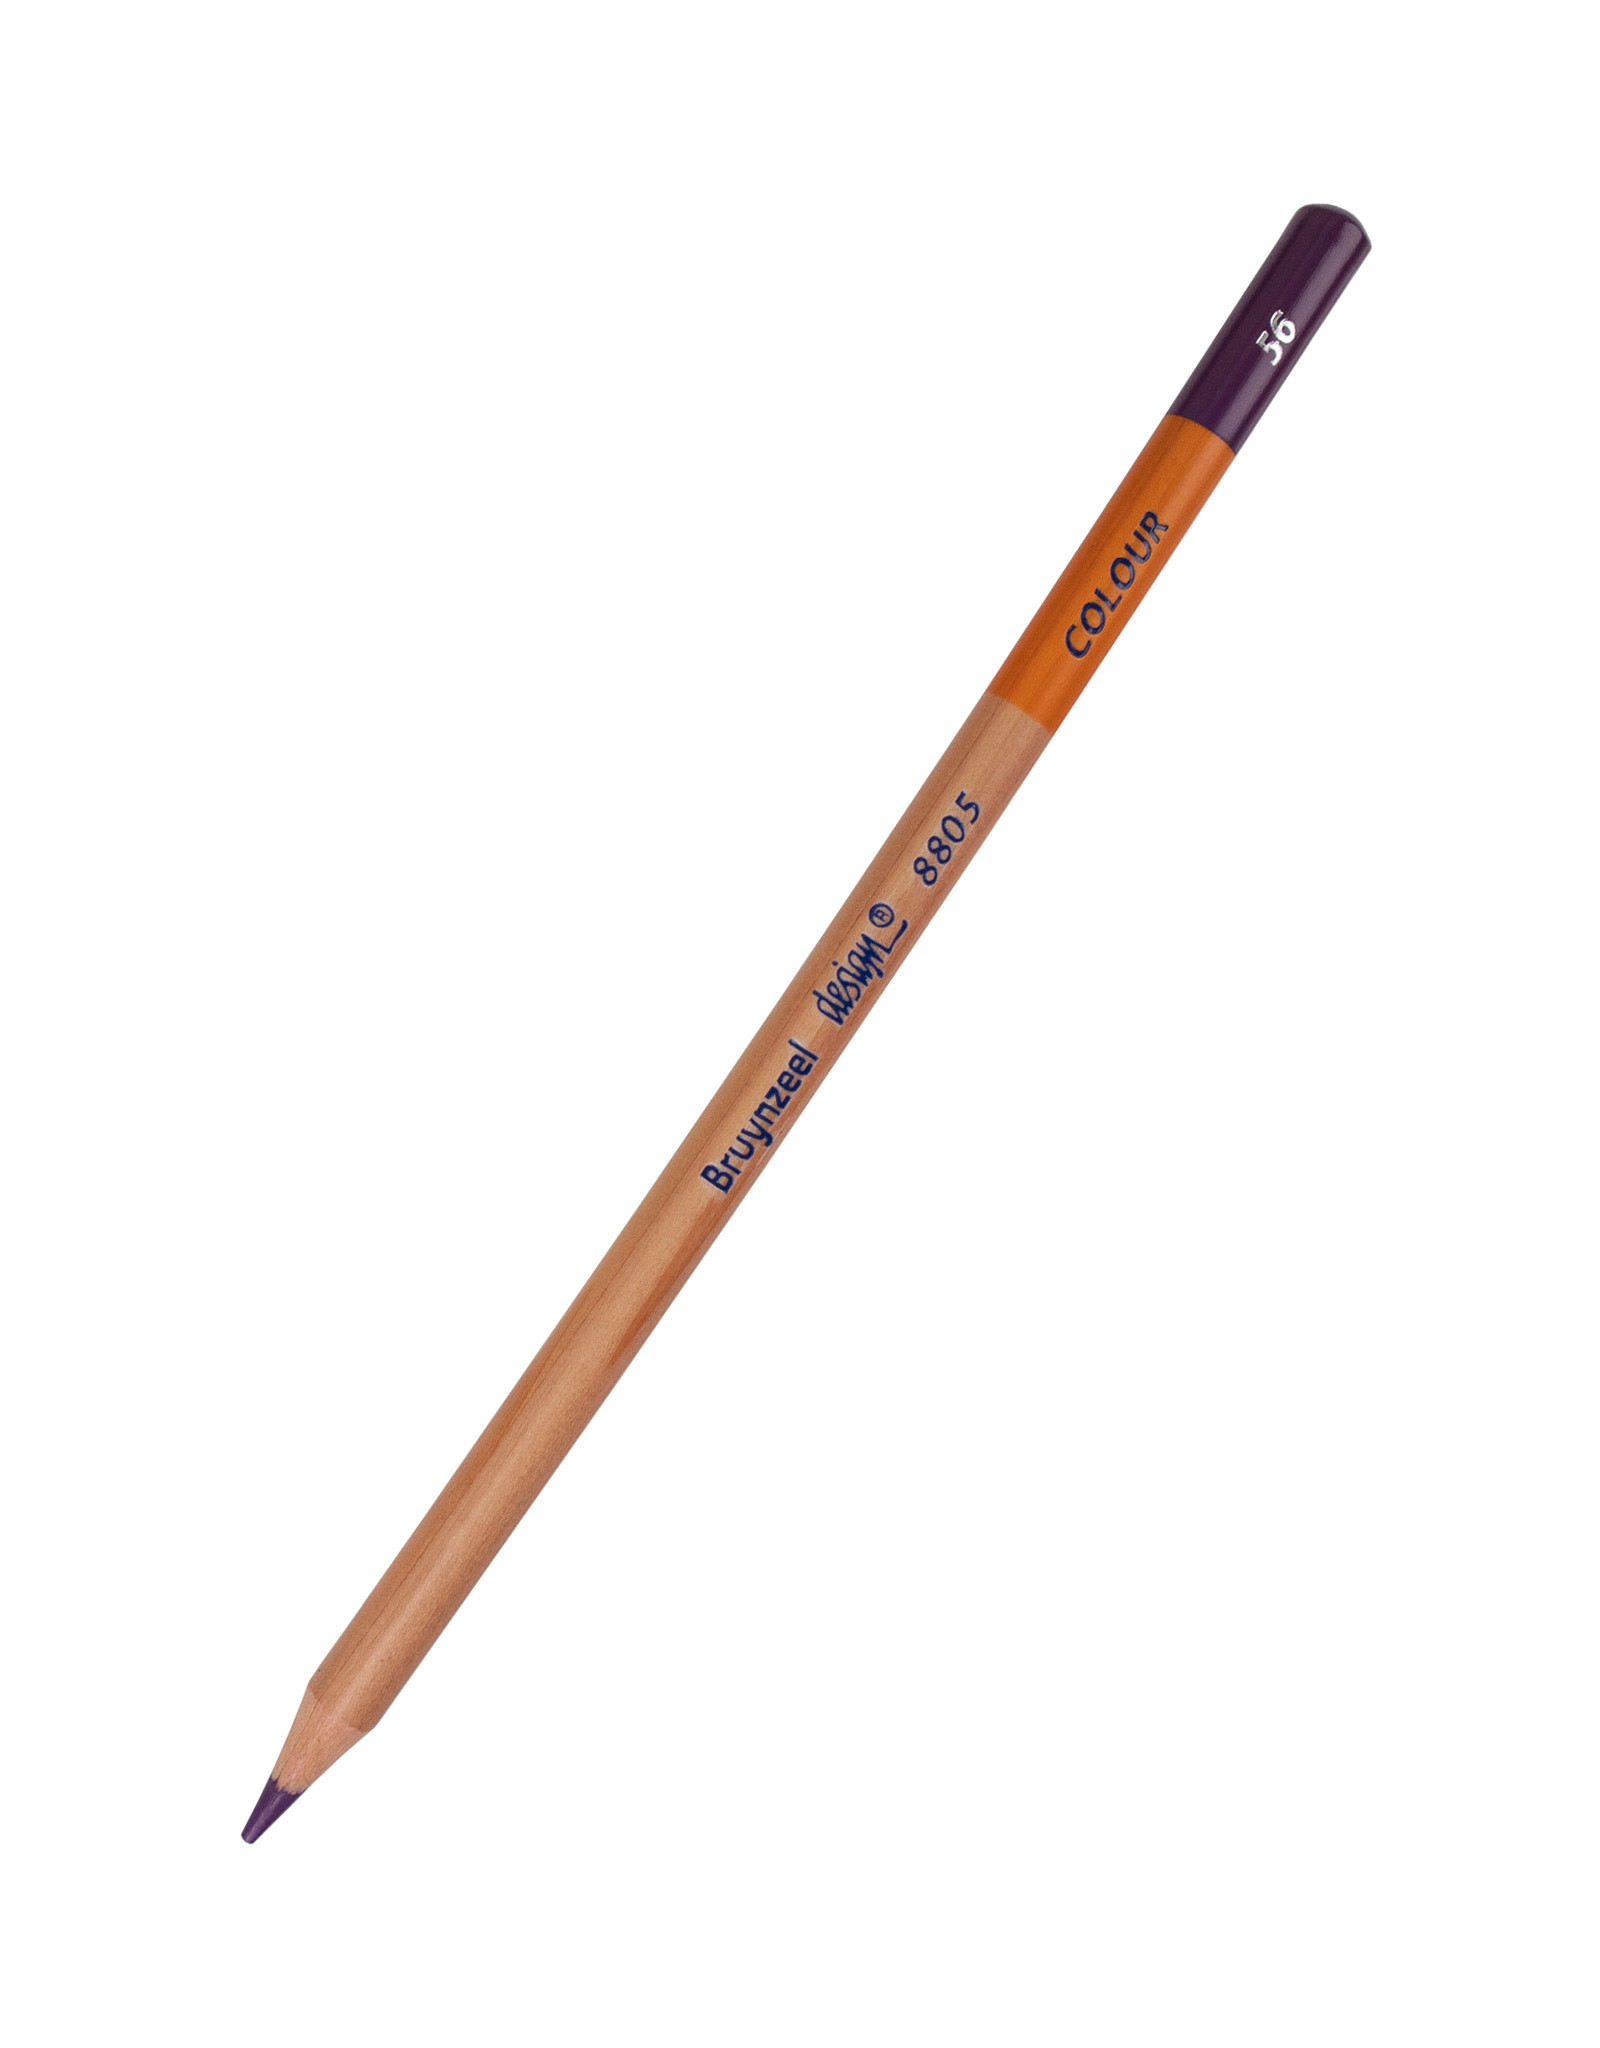 Royal Talens Bruynzeel Design Coloured Pencil, Mauve